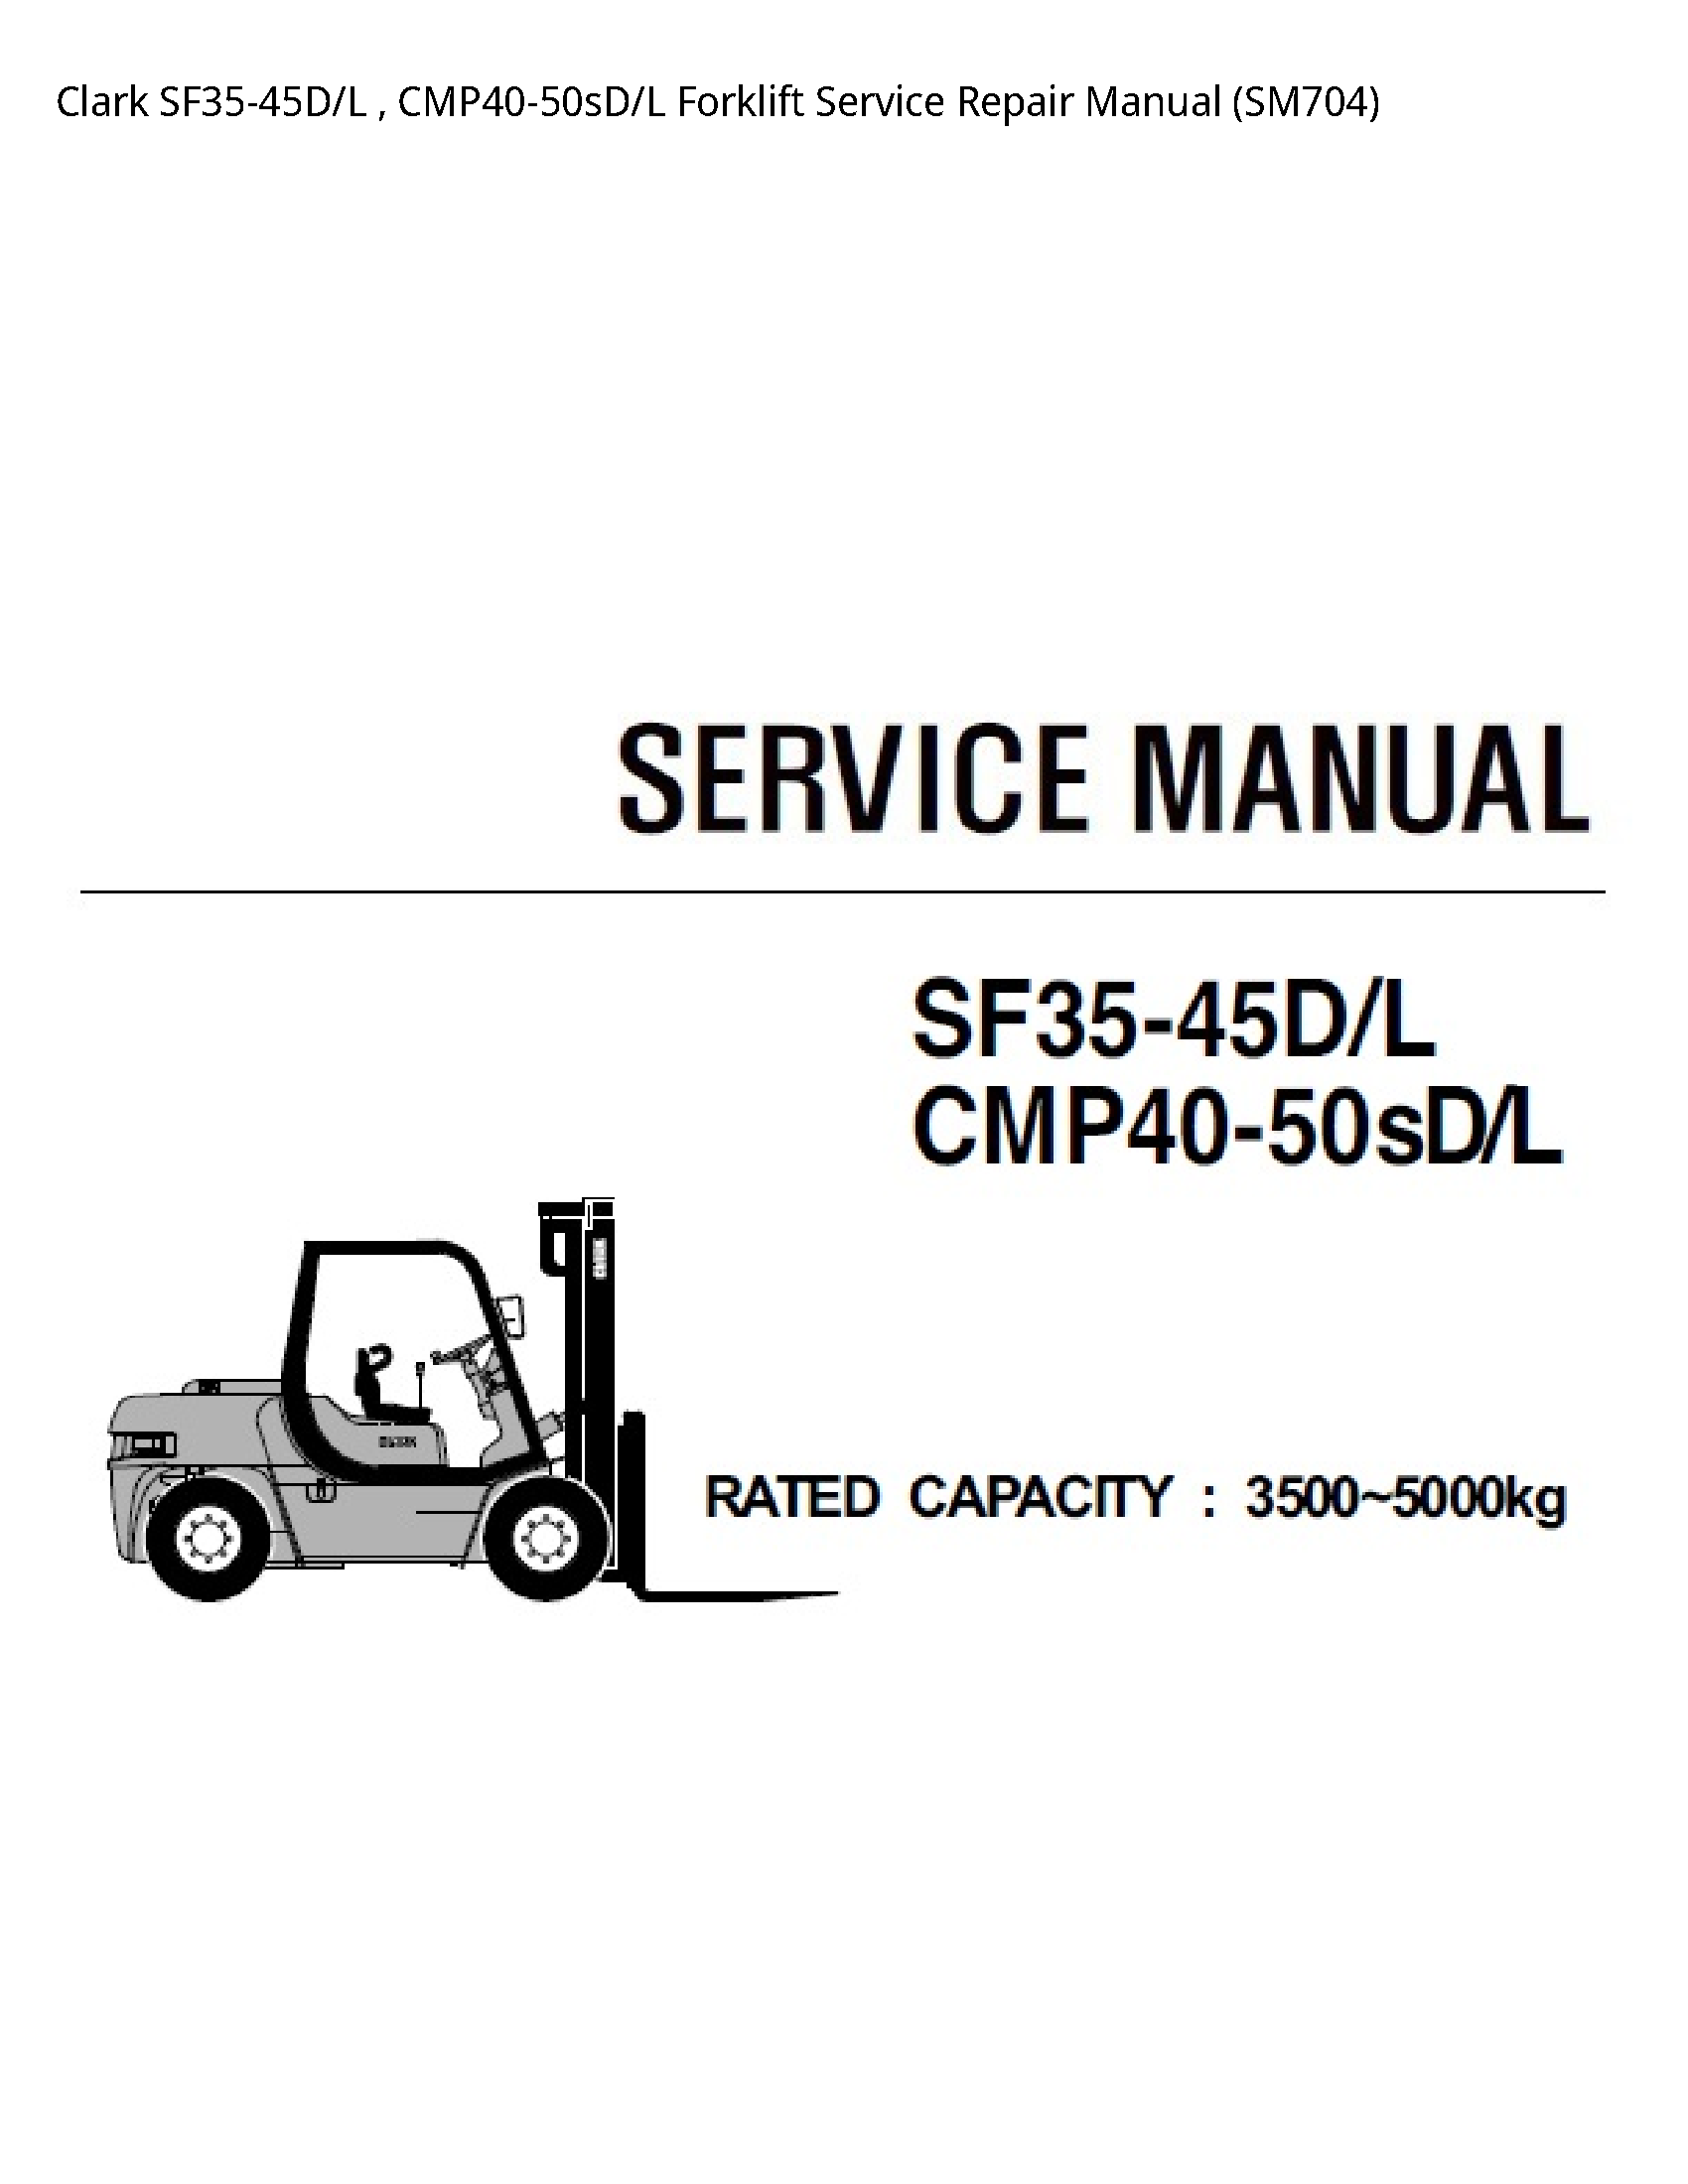 Clark SF35-45D Forklift manual